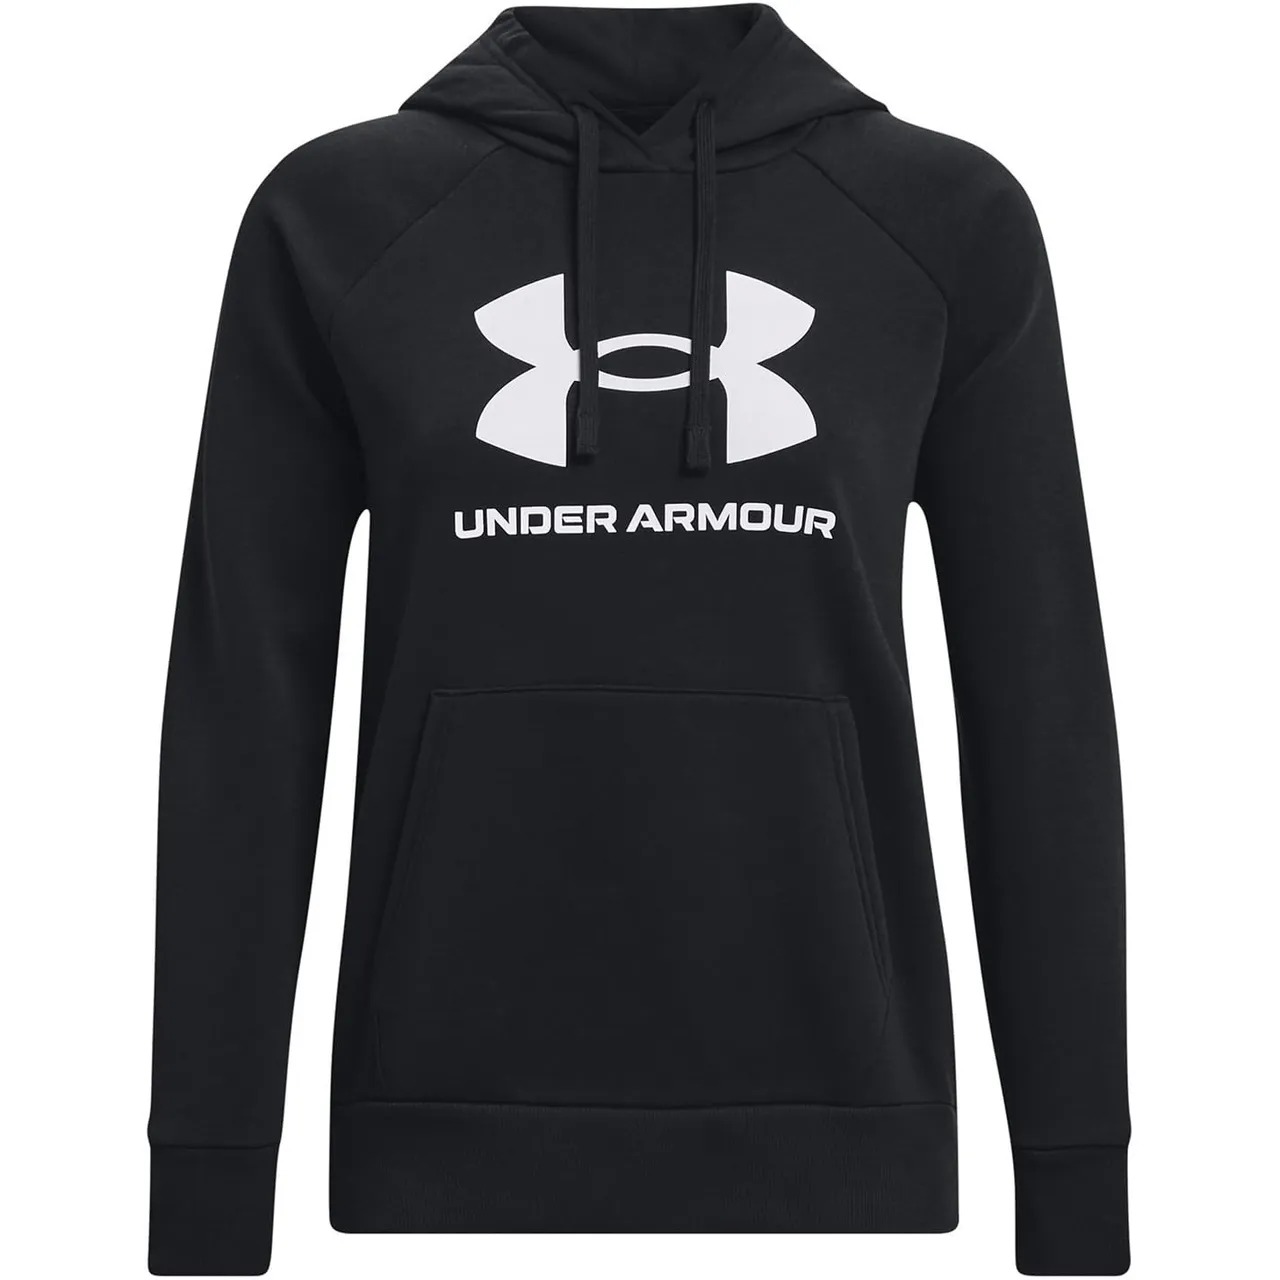 Under Armour Women's UA Rival Fleece Big Logo HDY Shirt